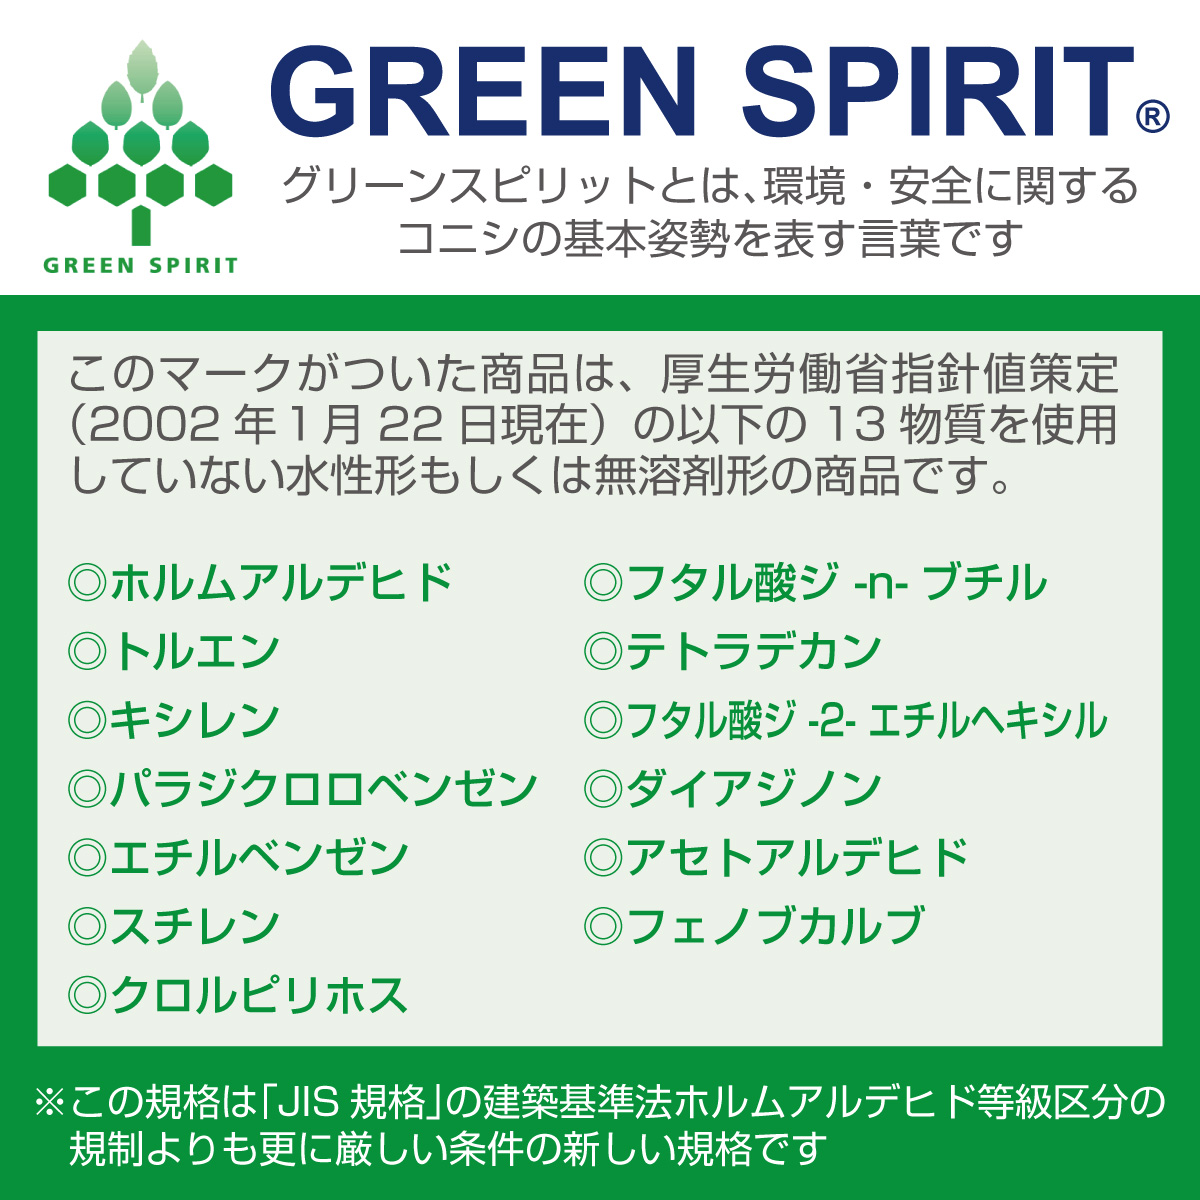 GREEN SPIRIT